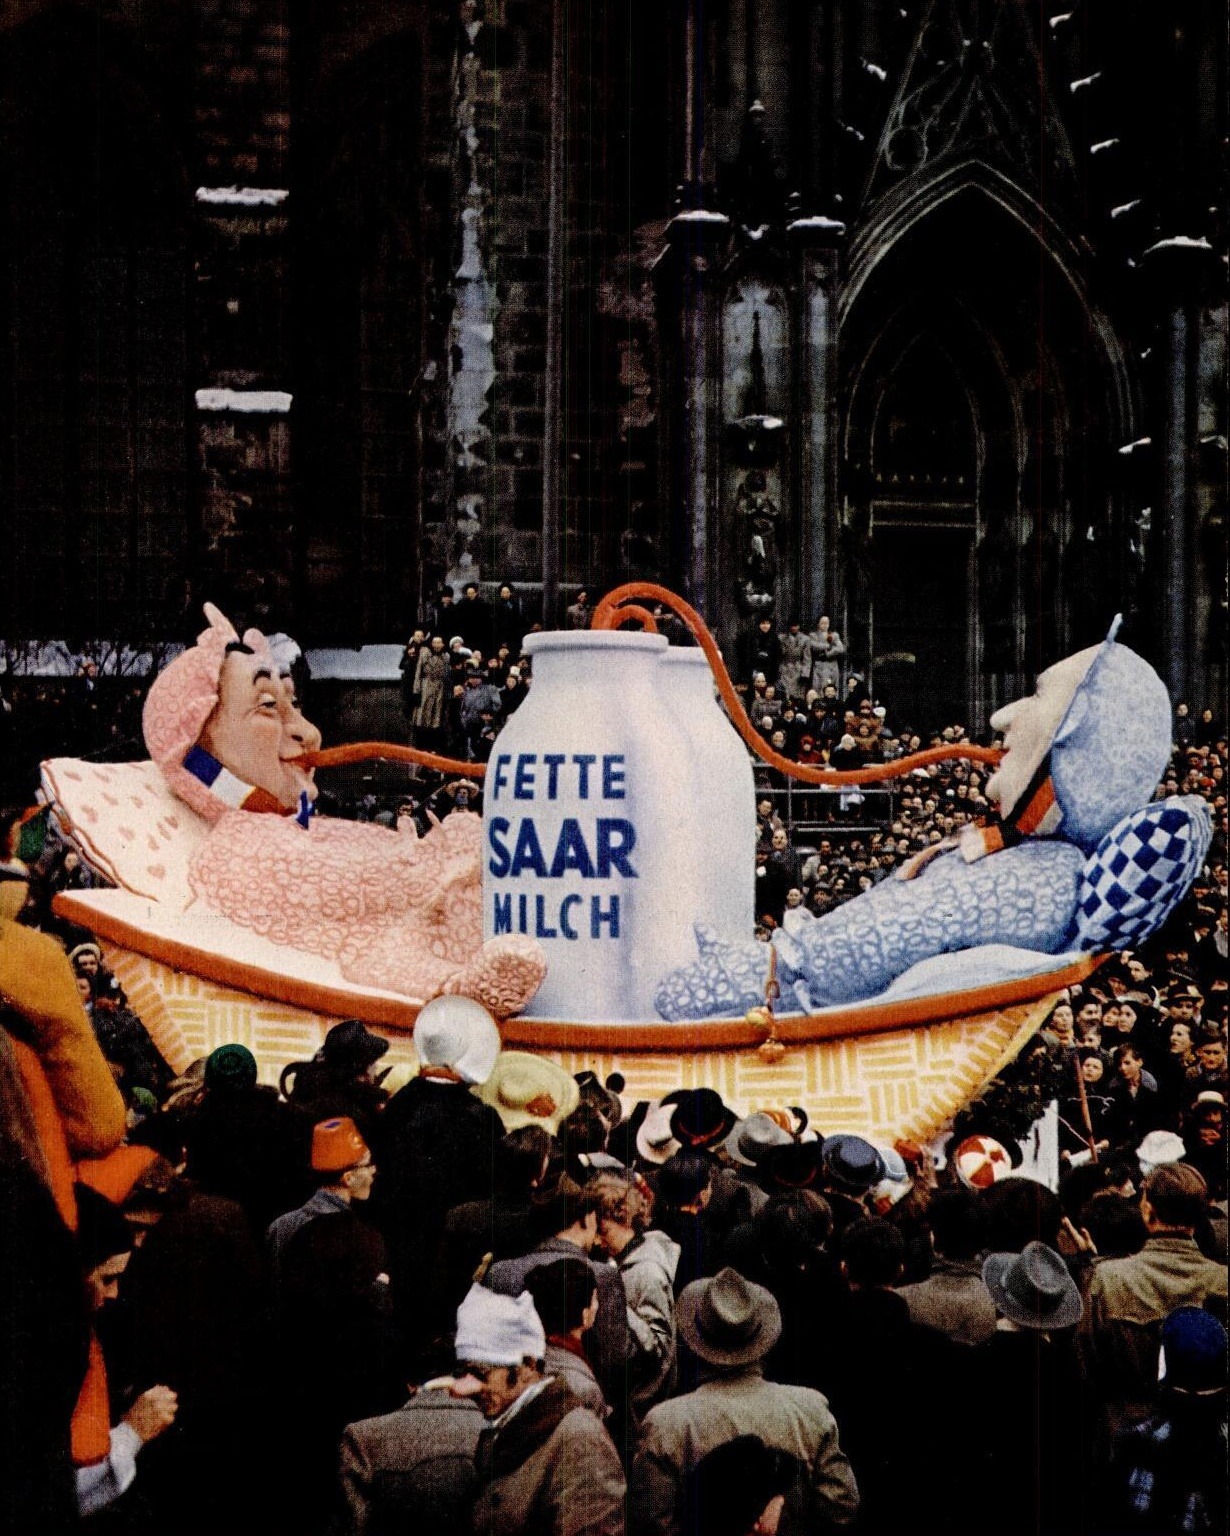 In the parade of satirical floats, most of them mocking politics, Konrad Adenauer